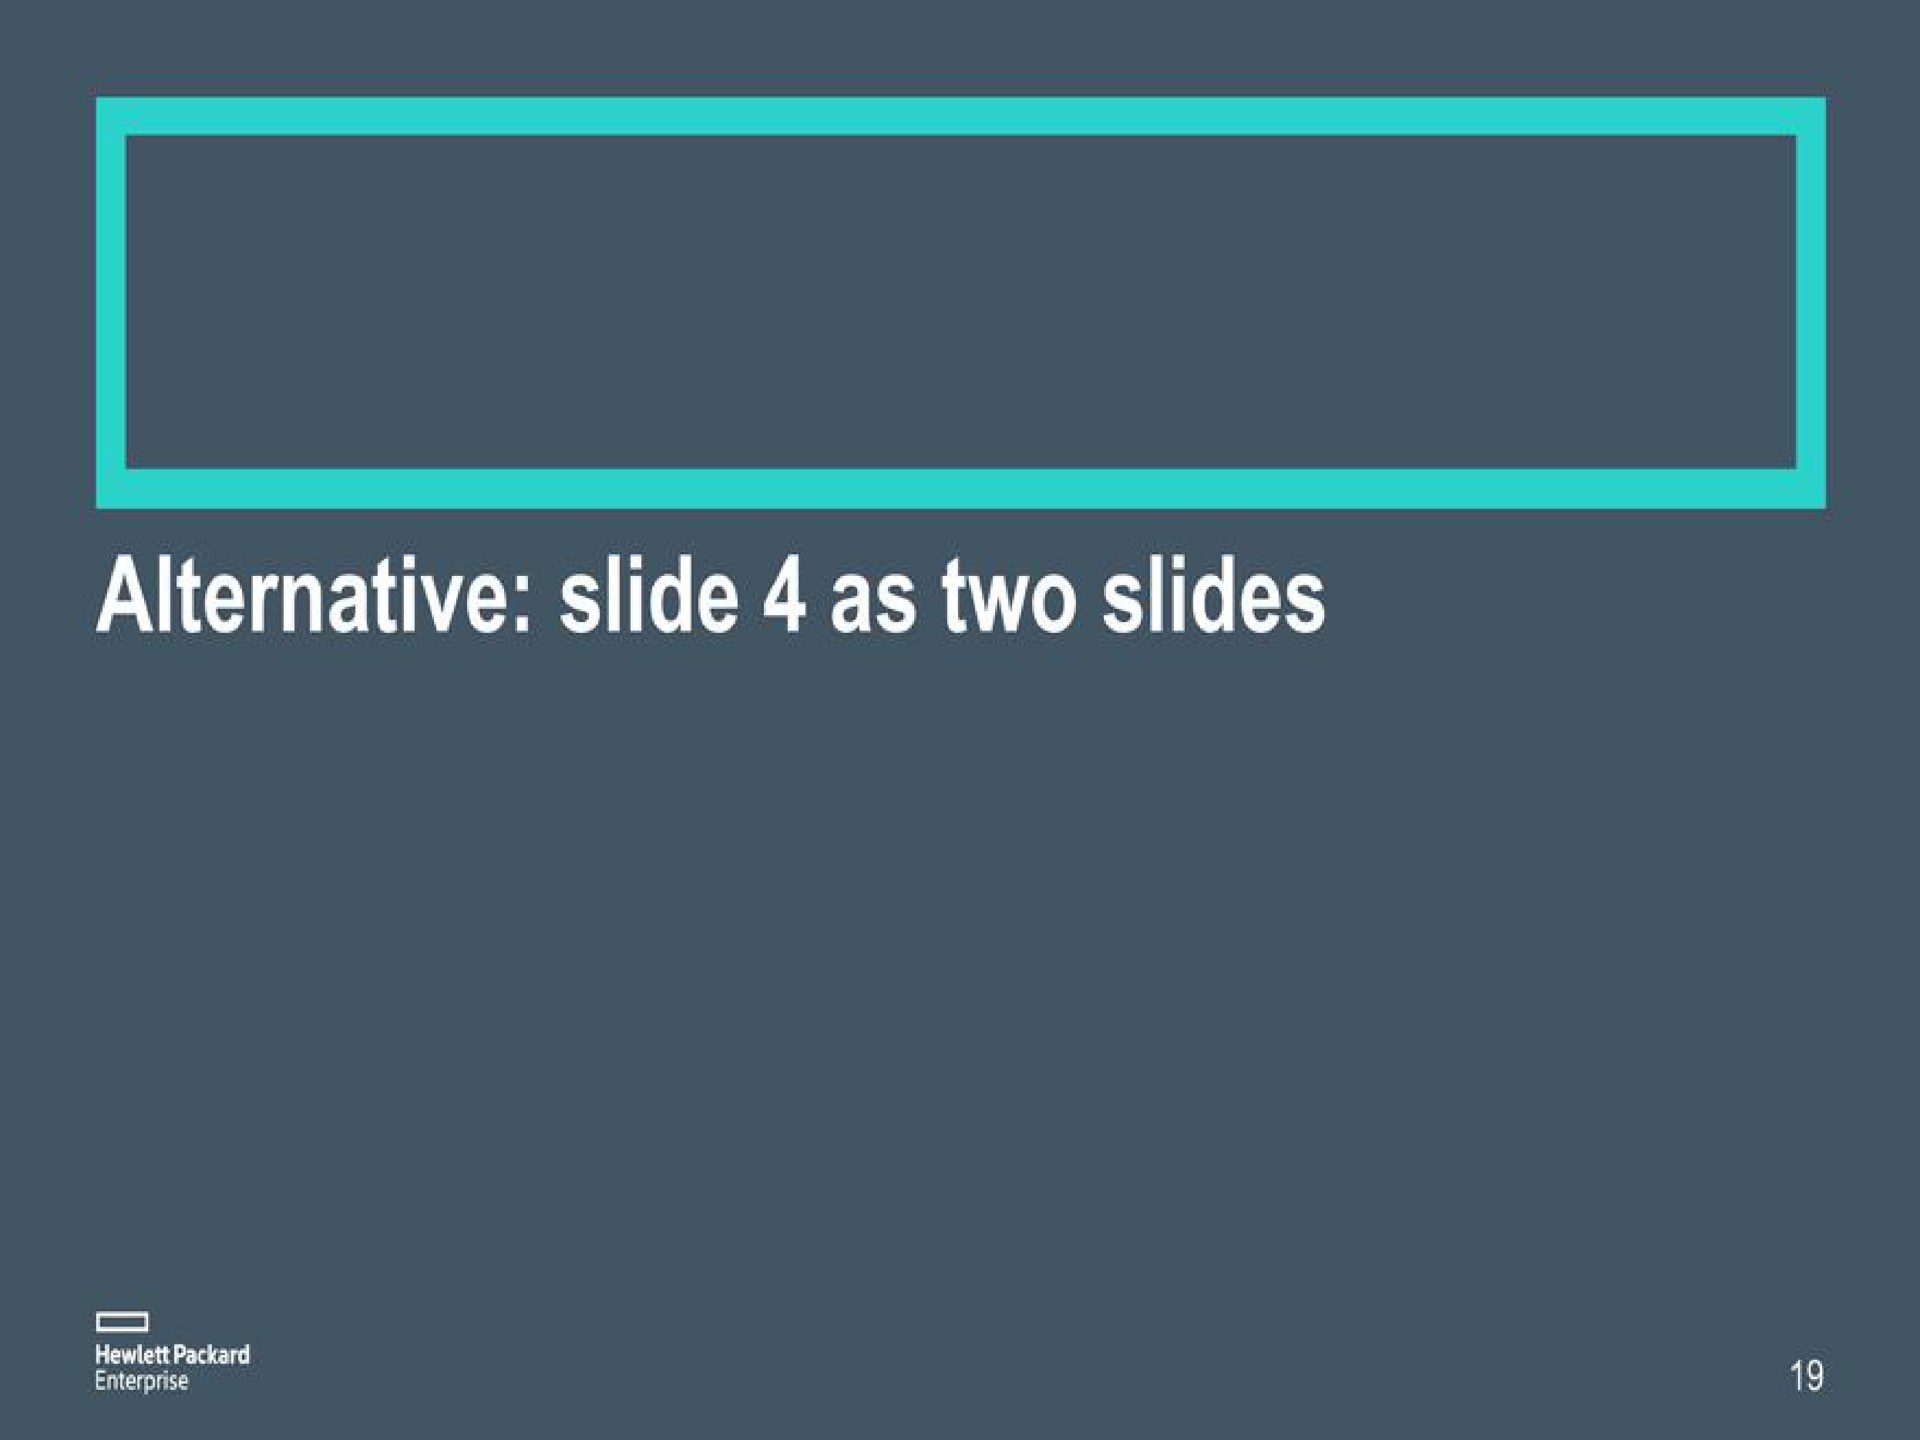 alternative slide as two slides | Hewlett Packard Enterprise